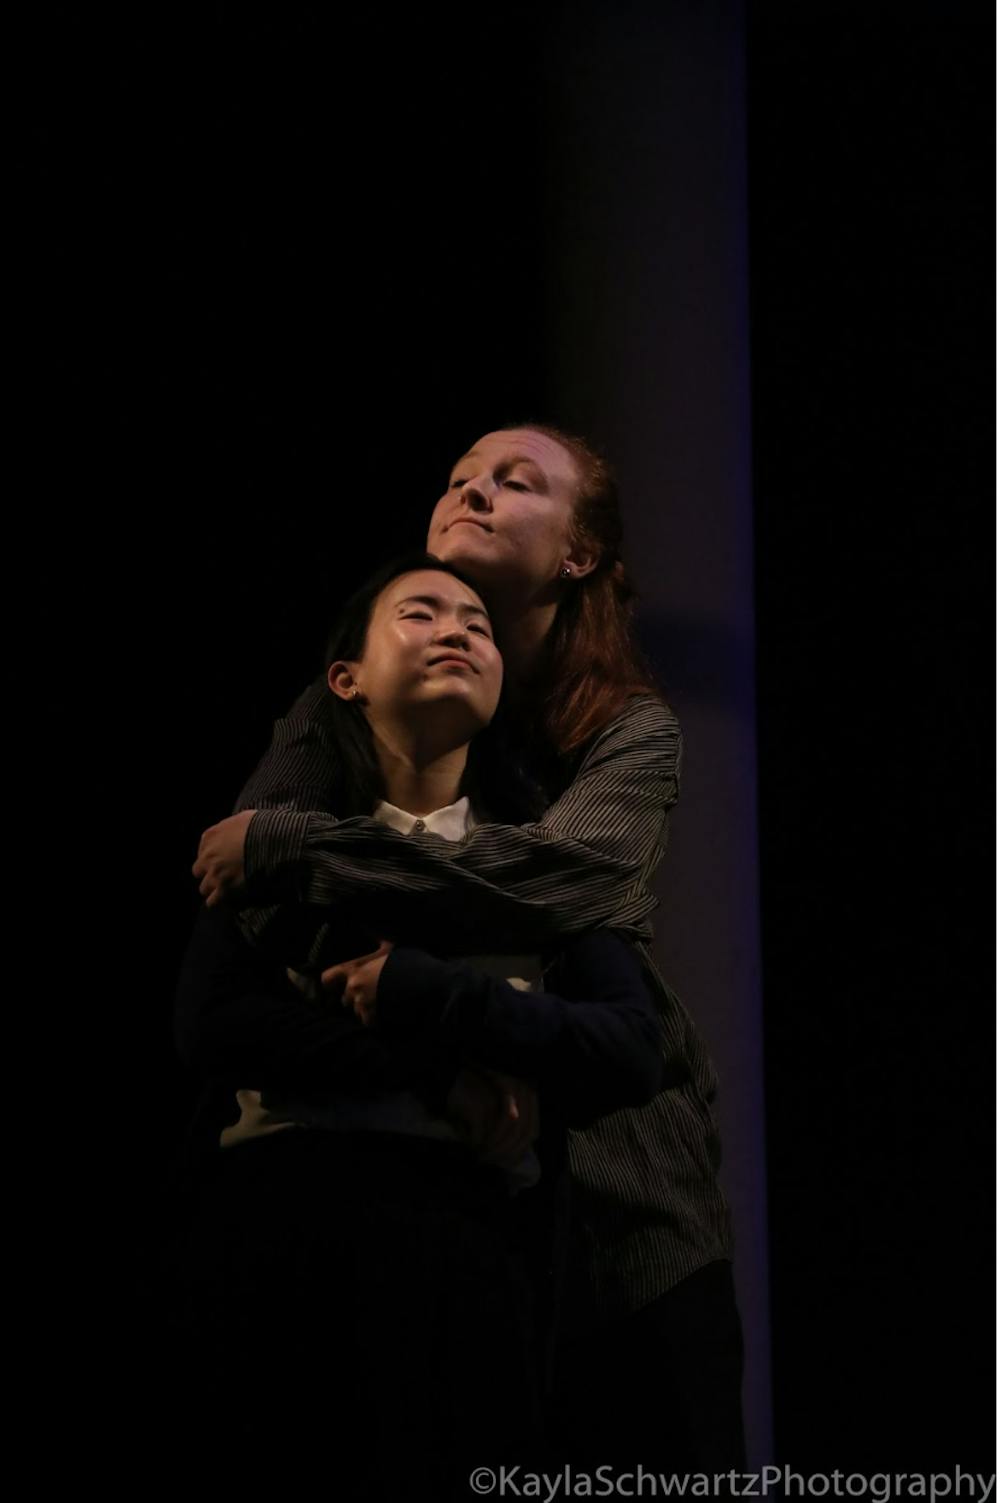 Actors embrace during performance